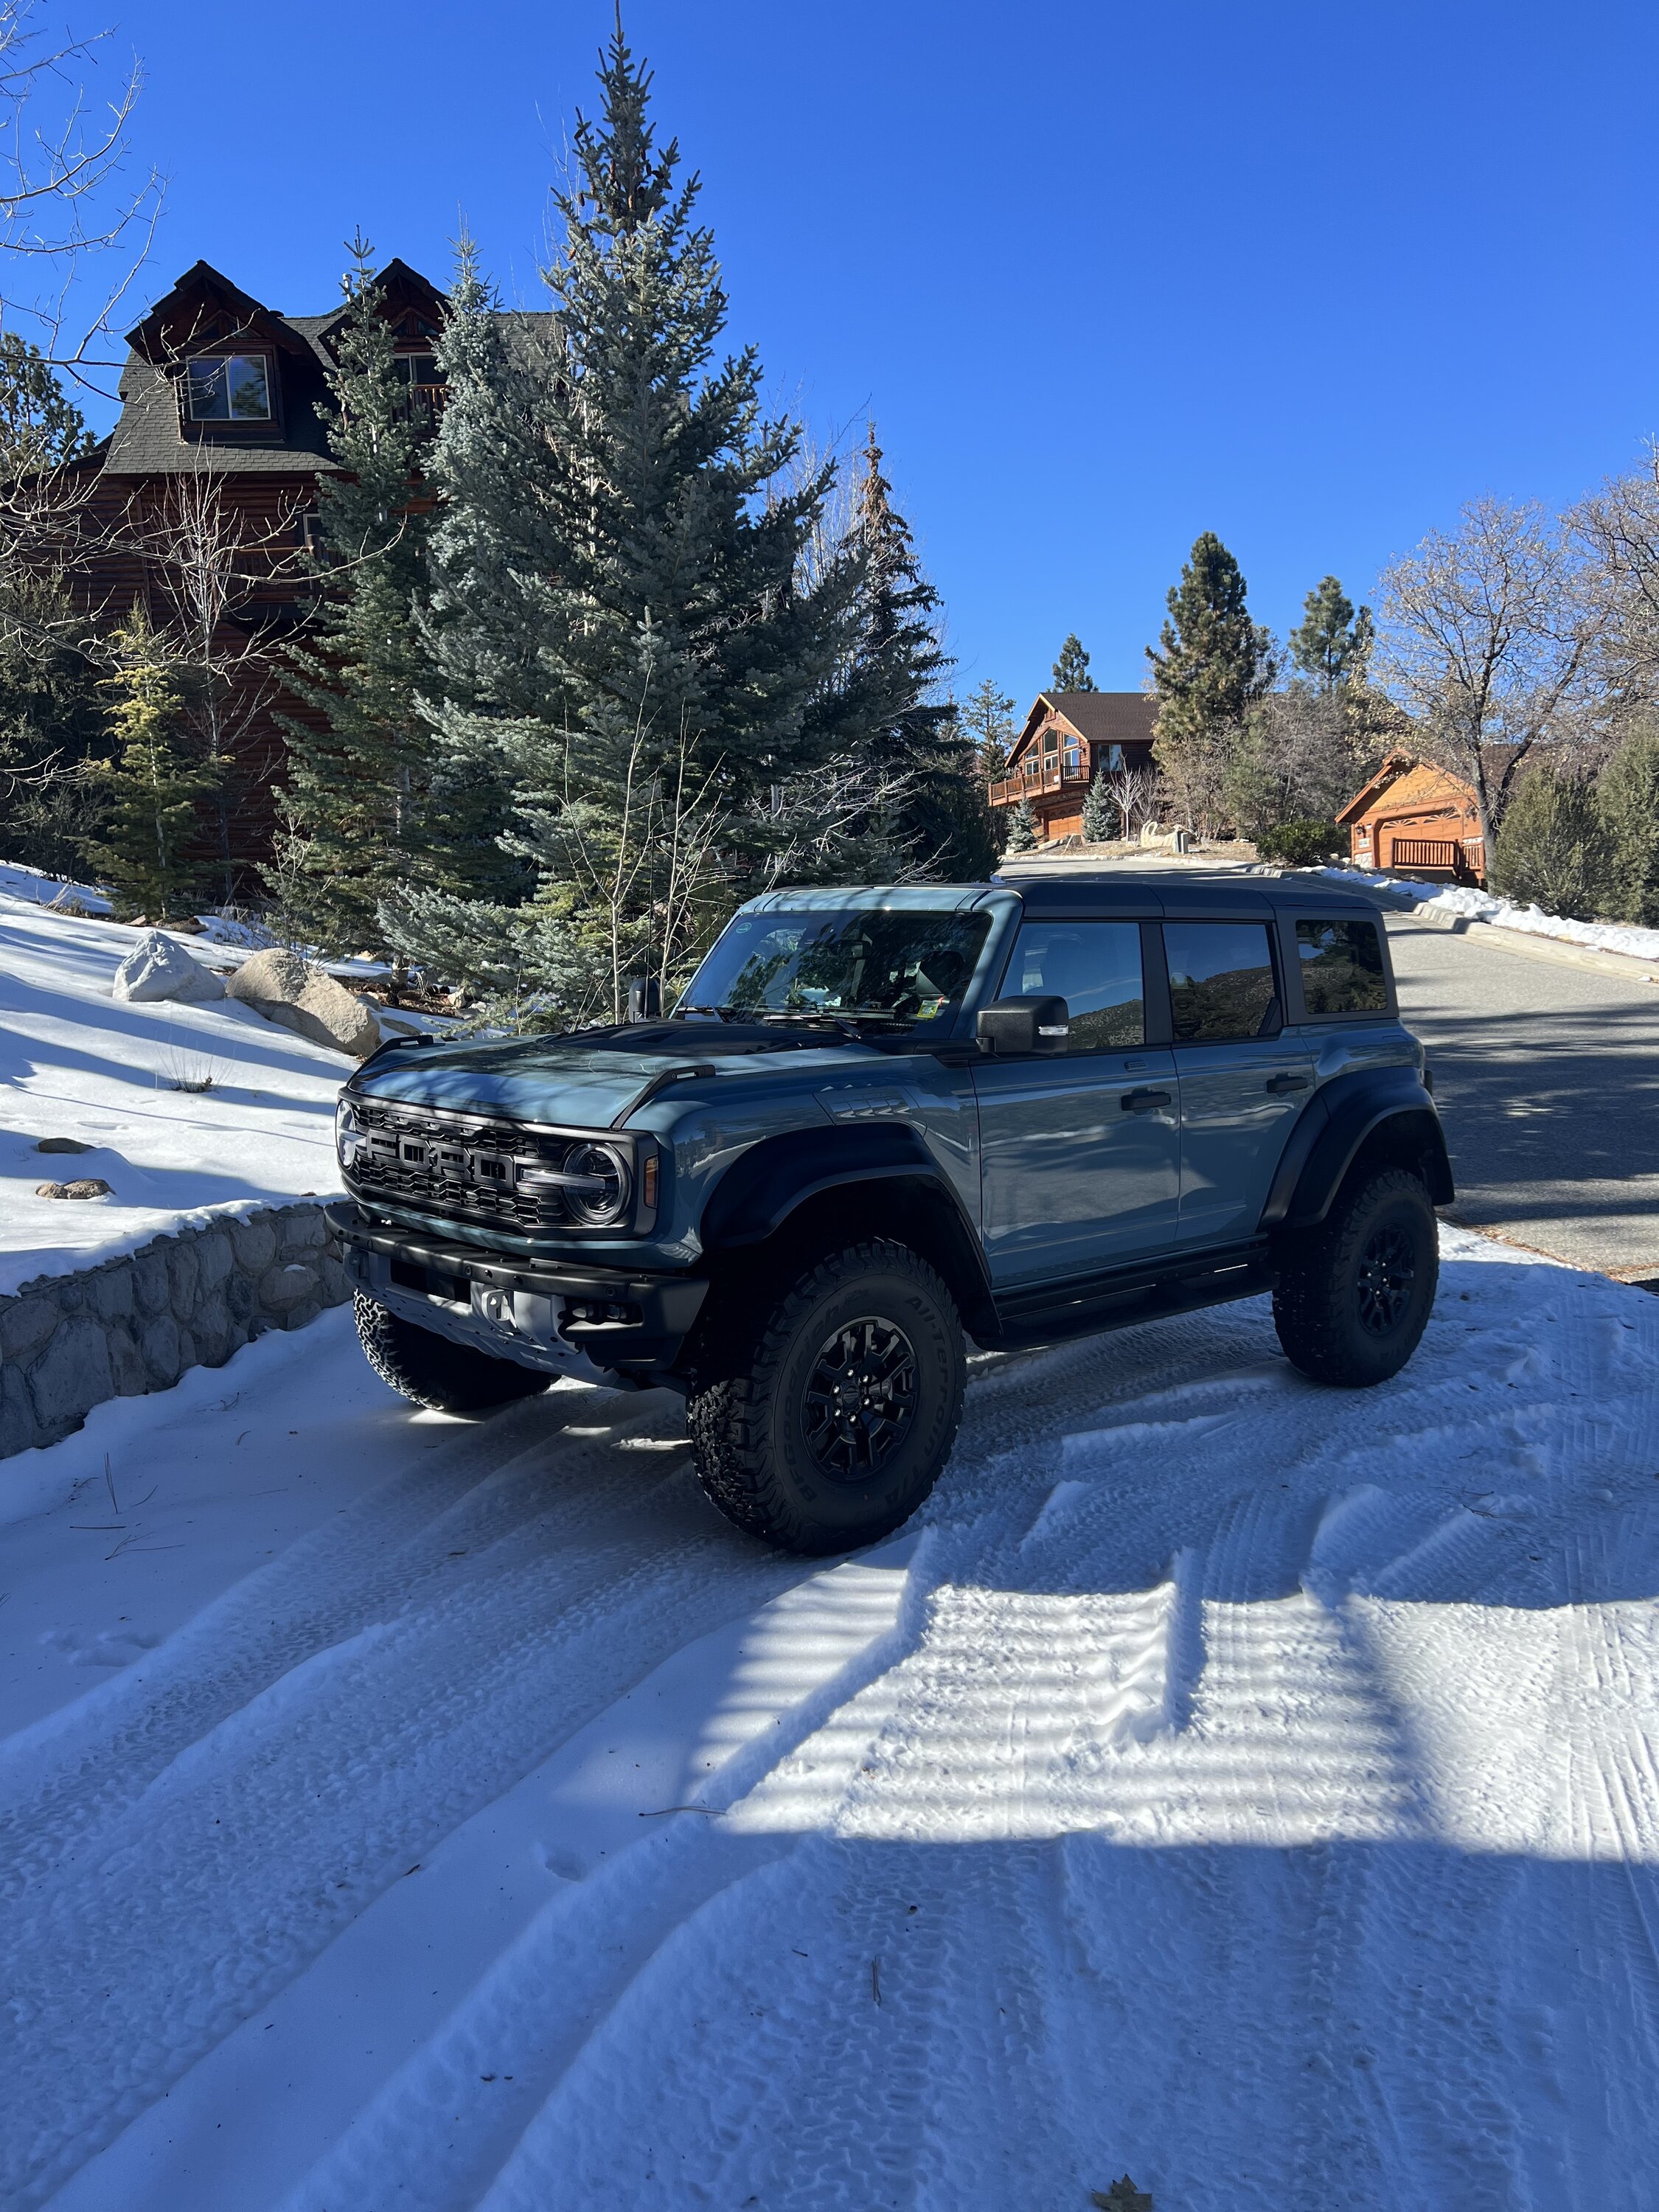 Ford Bronco Show us your Bronco snow pics!! ☃️❄️🥶 413F74A1-4879-4C4F-BC24-9C386911B6BE